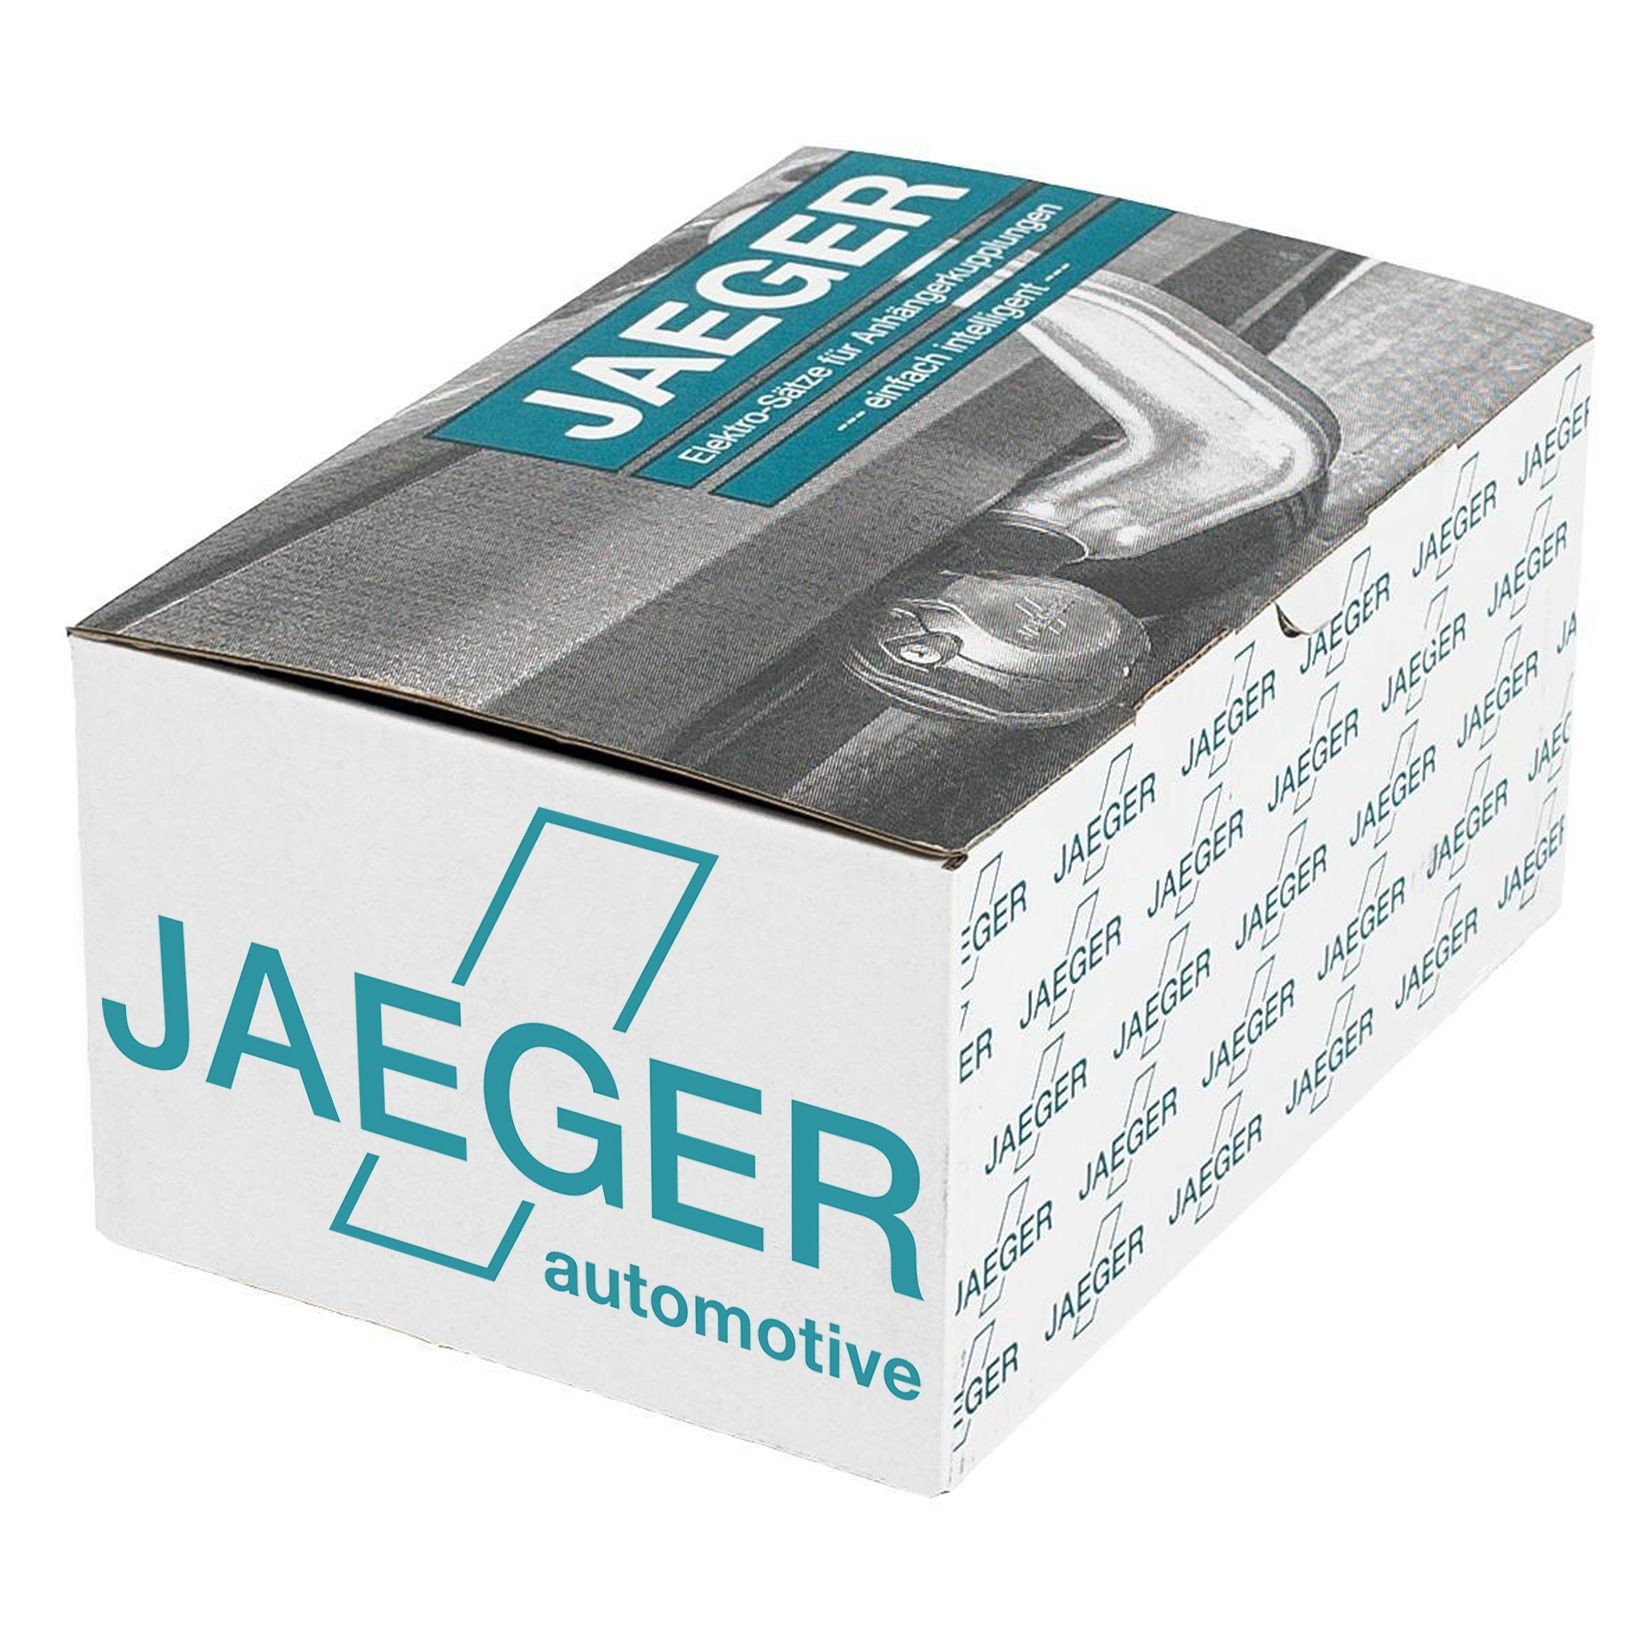 Towbar electric kit JAEGER 12270009 - Volkswagen BORA Towbar / parts spare parts order